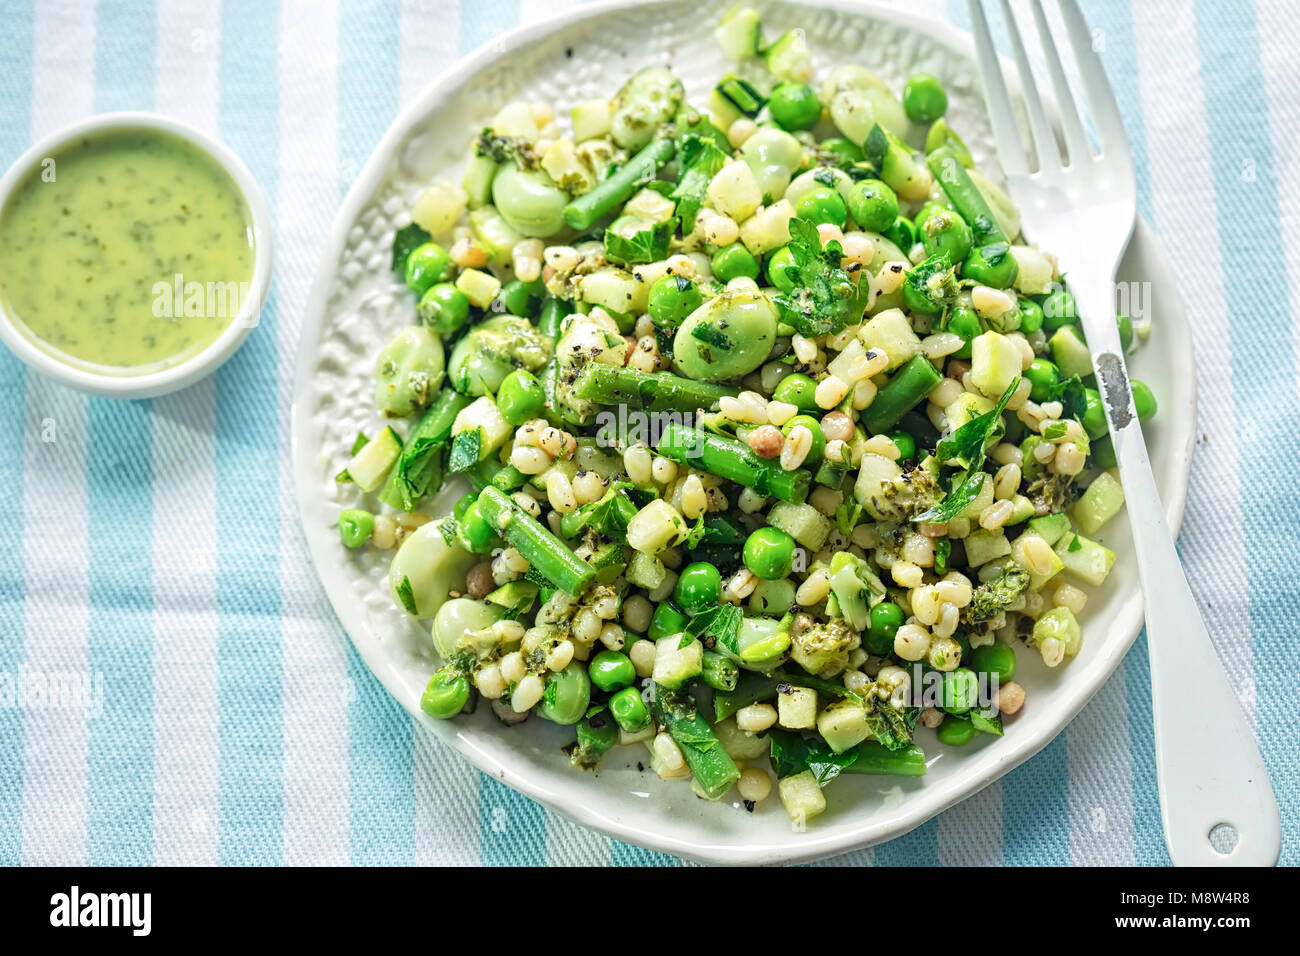 Fregola Nudeln & grünen Salat. Zucchini, grüne Bohnen, geröstetes fregola Nudeln mit Zitrone & Petersilie Dressing. Stockfoto